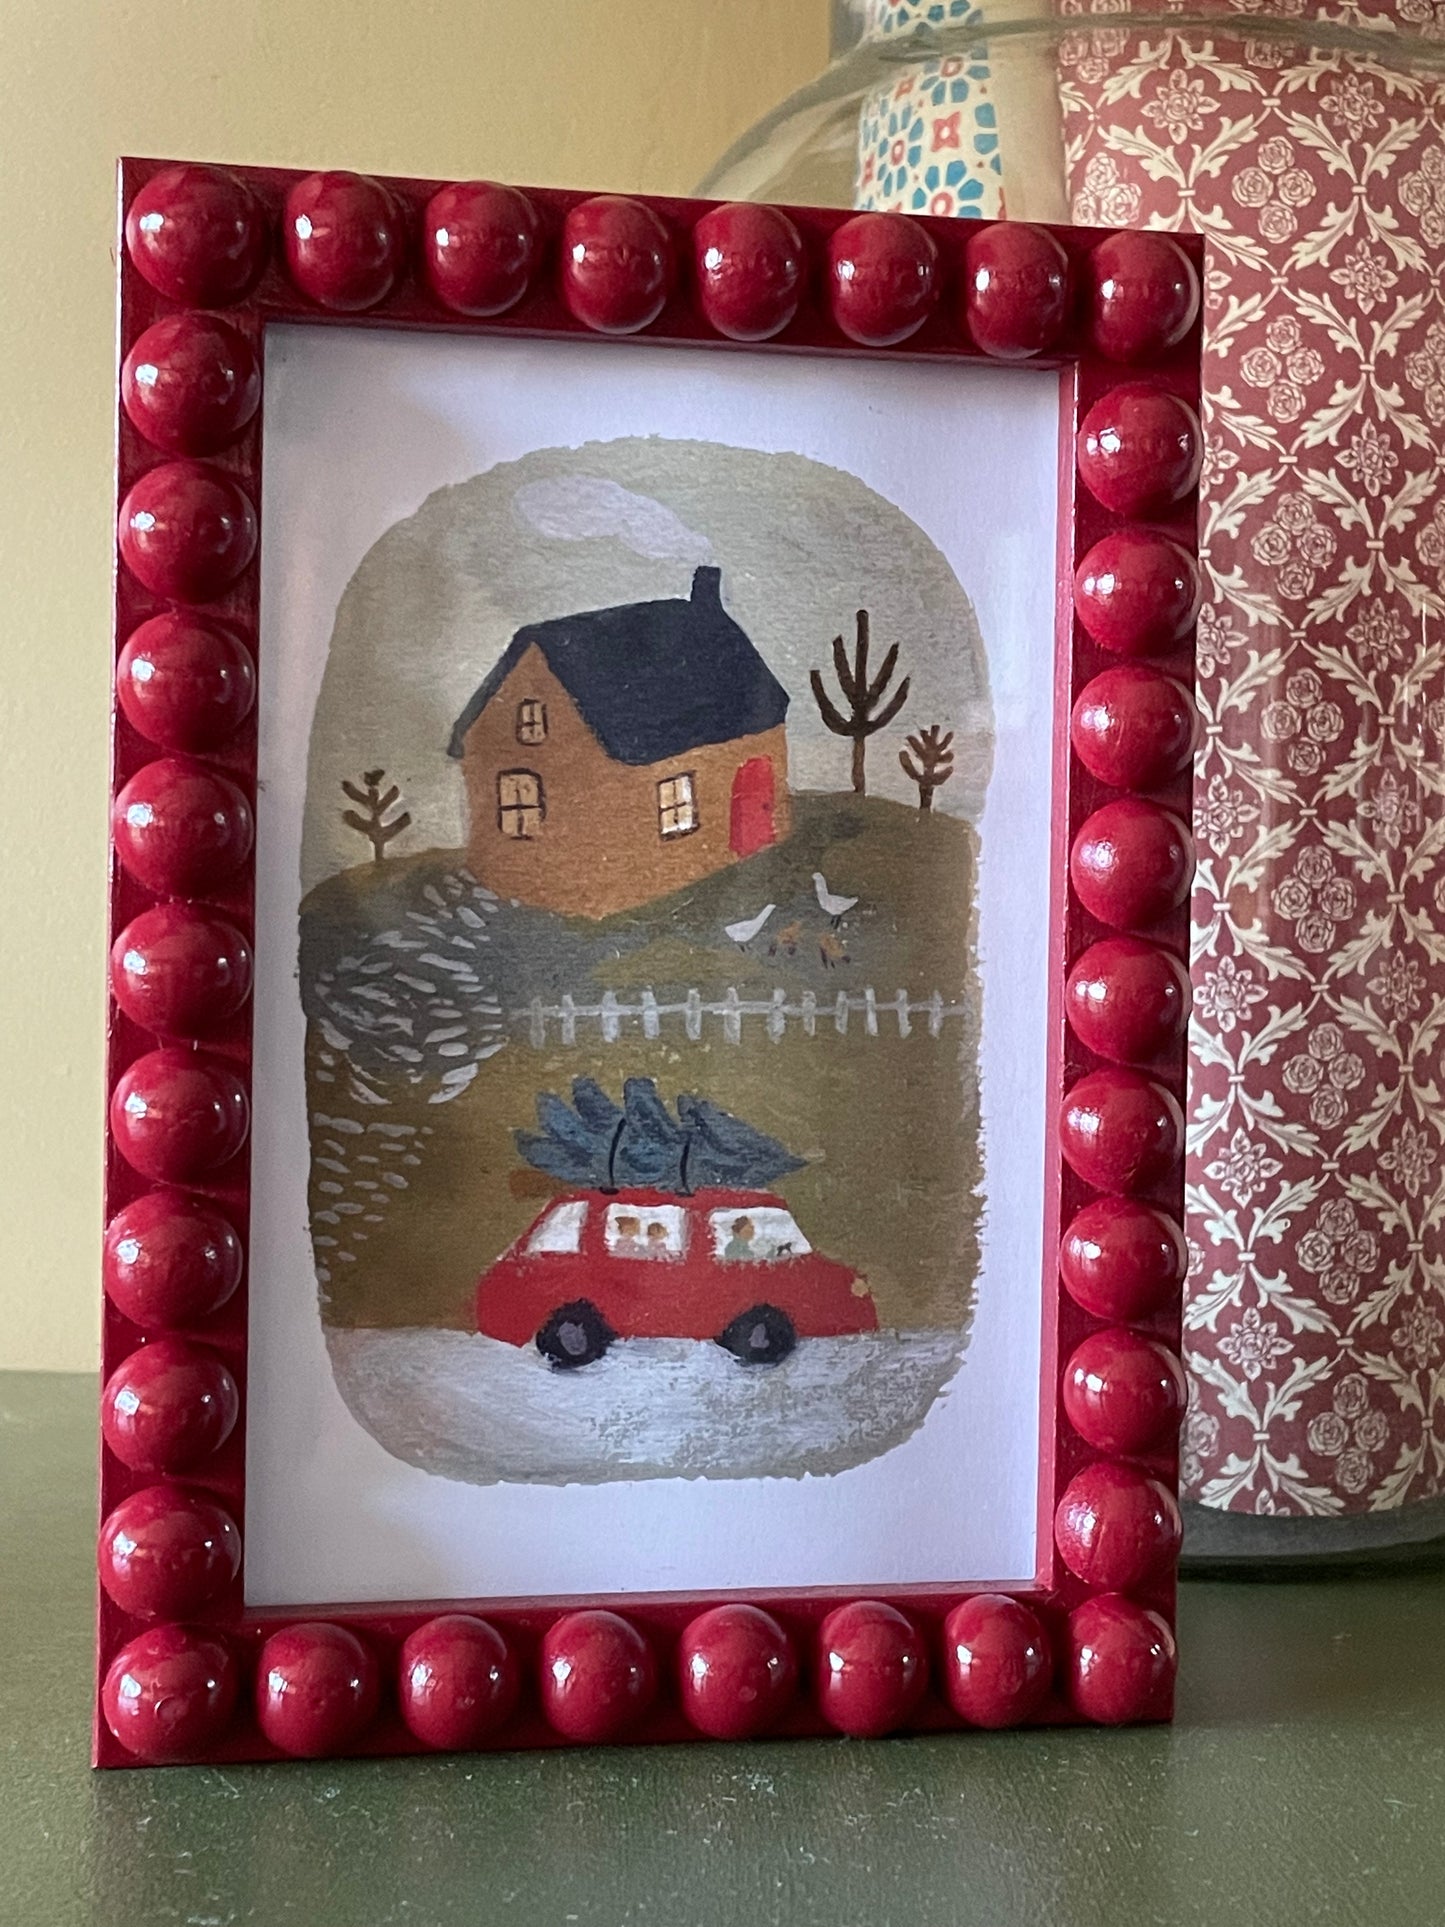 Berry Bobbin Bobble Frame with Christmas print